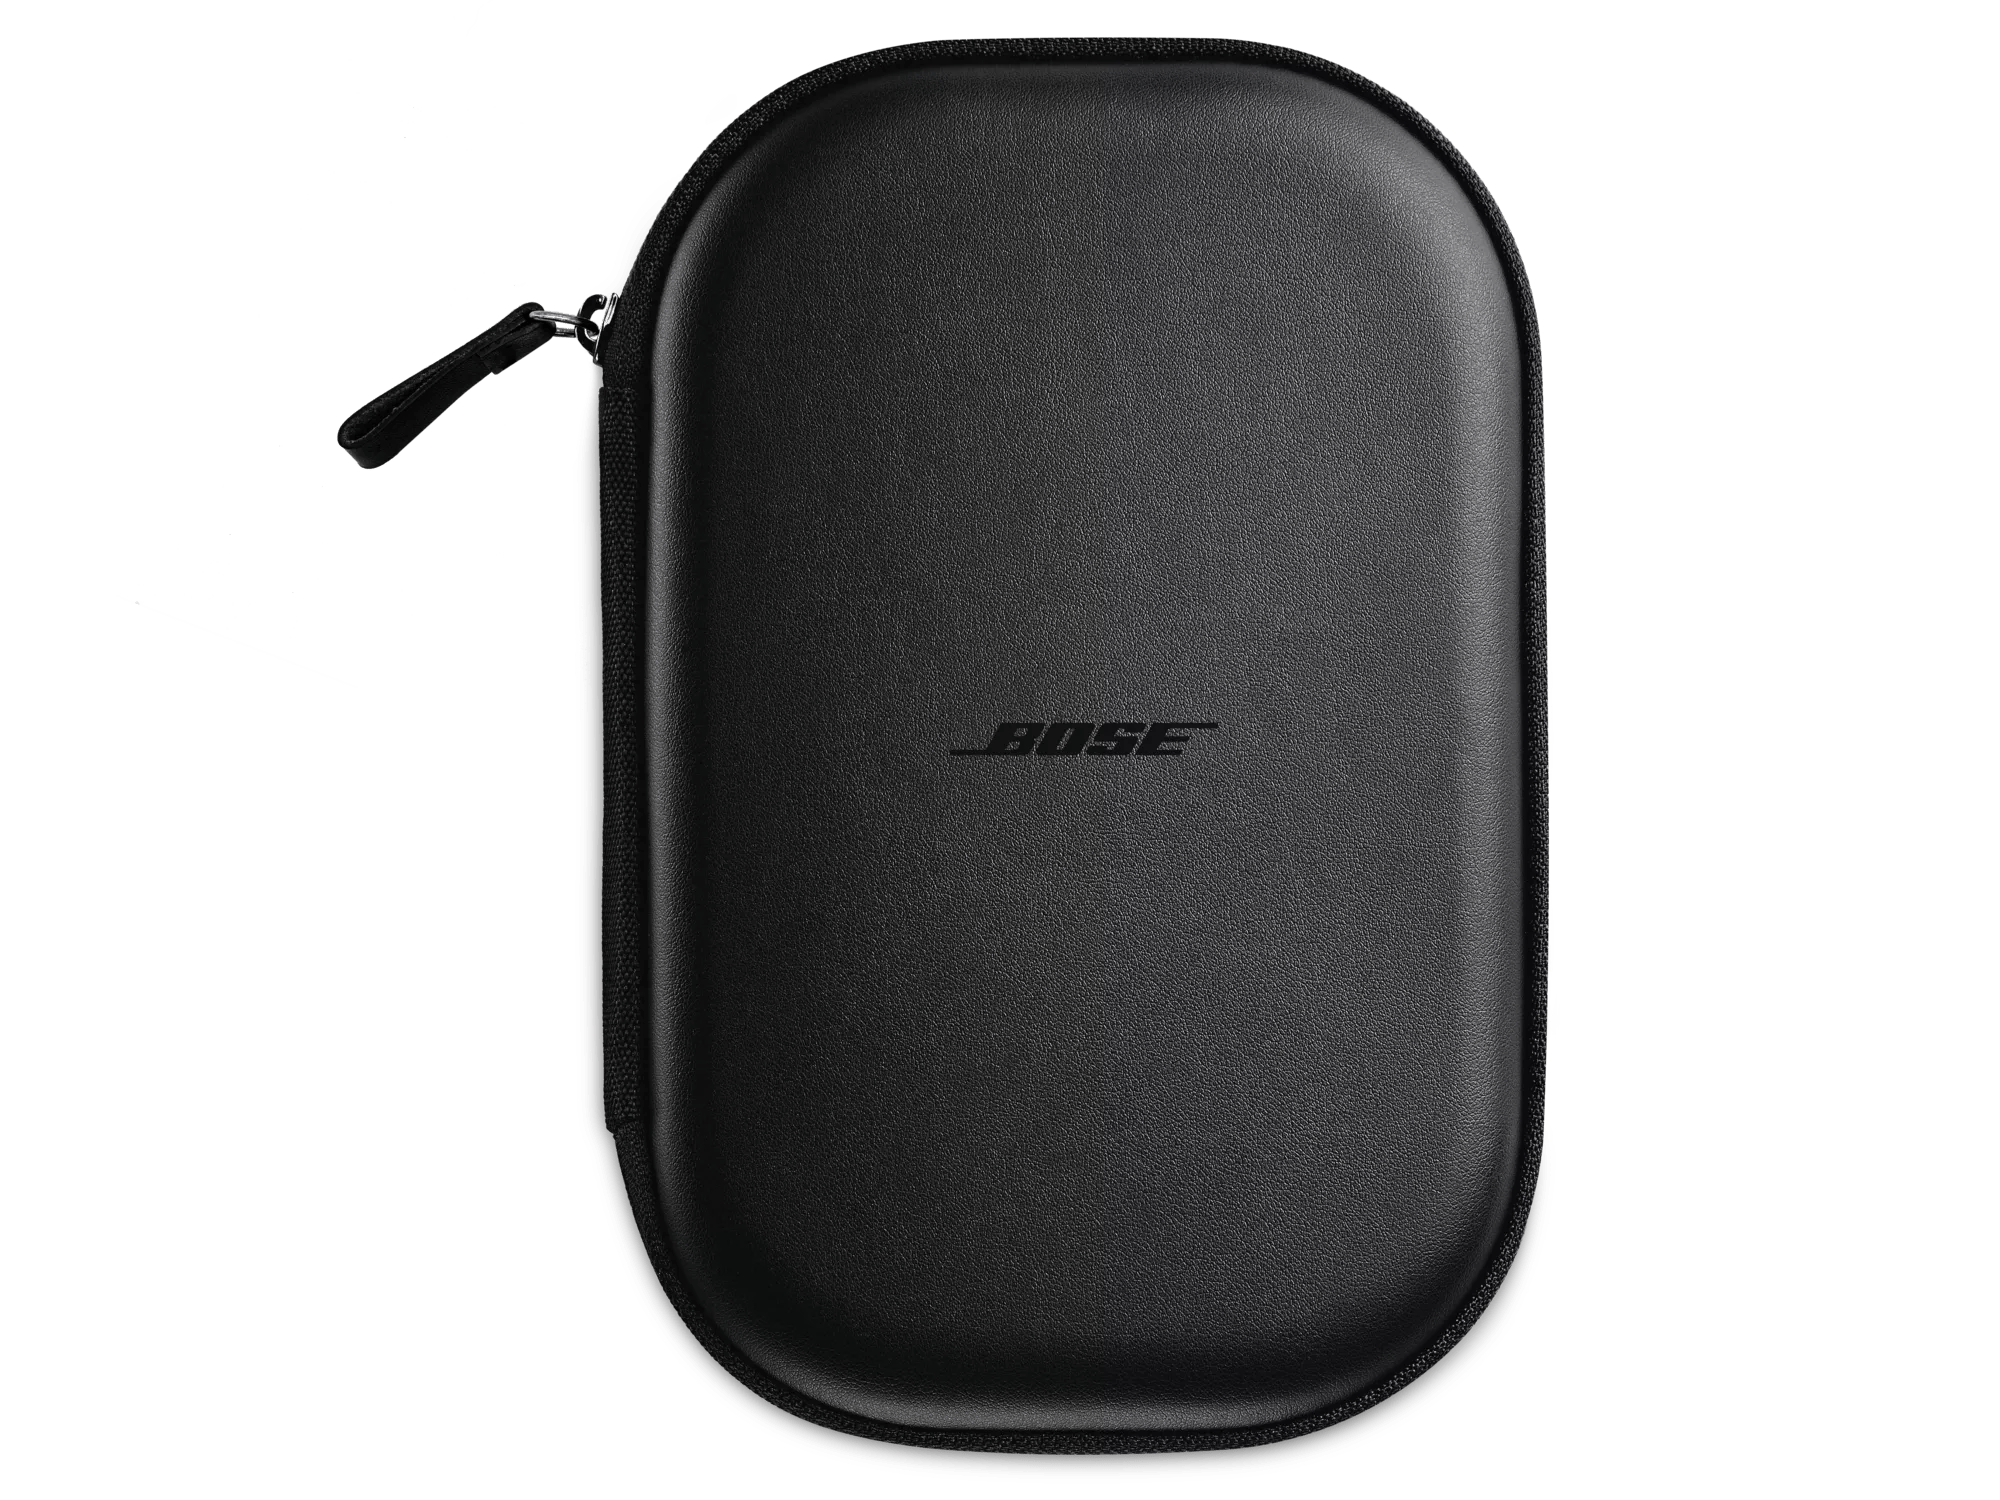 Bose QuietComfort Headphones Carry Case